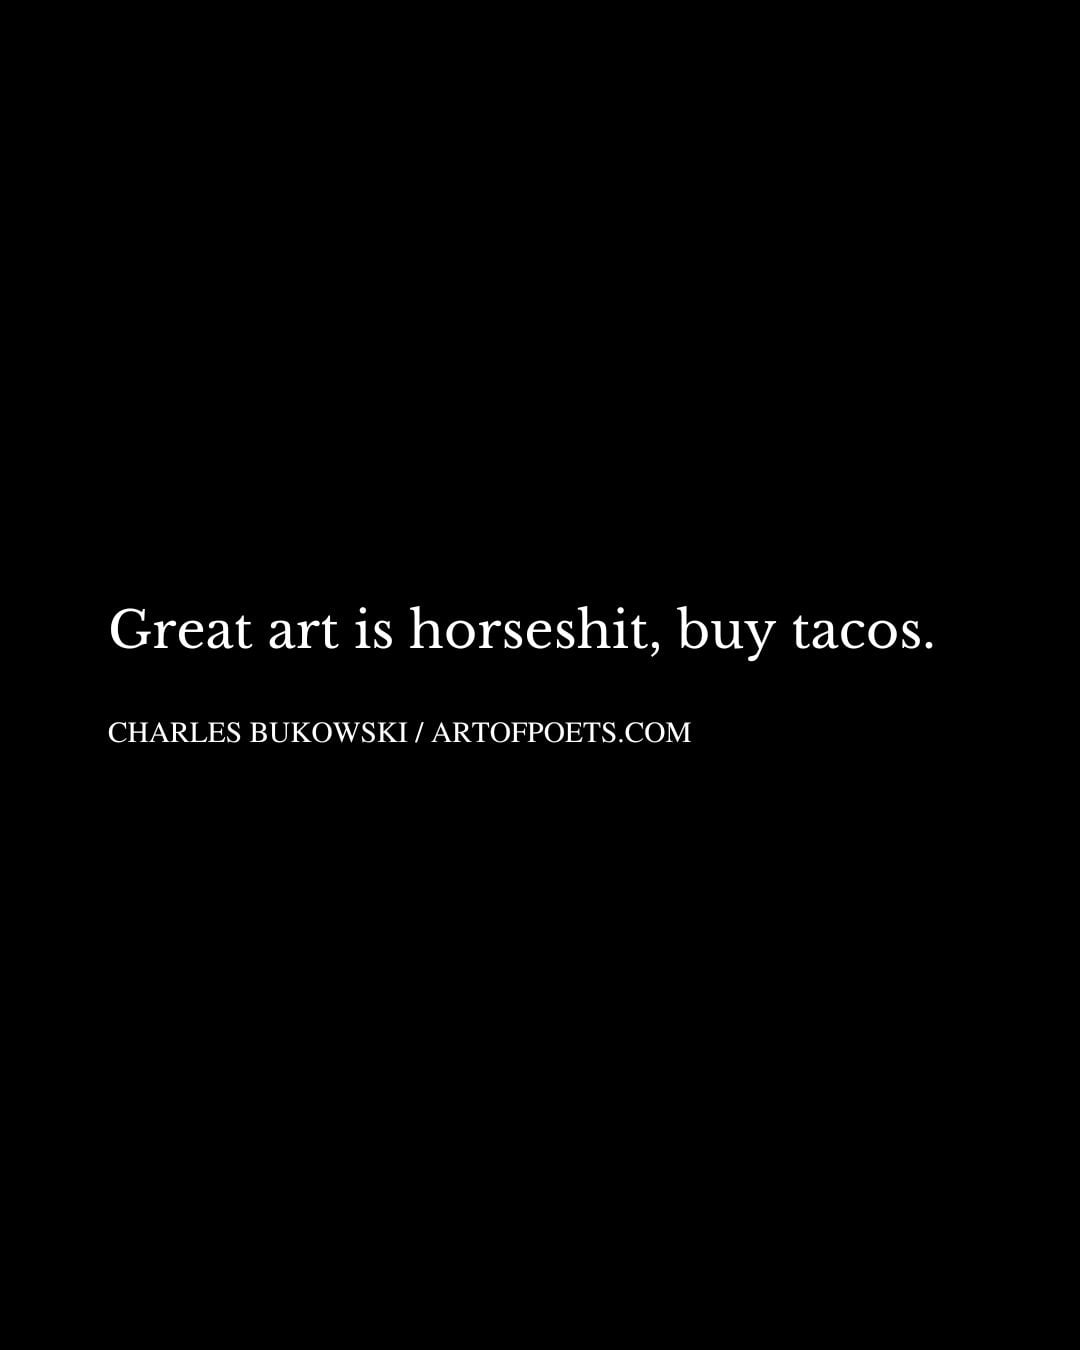 Great art is horseshit buy tacos